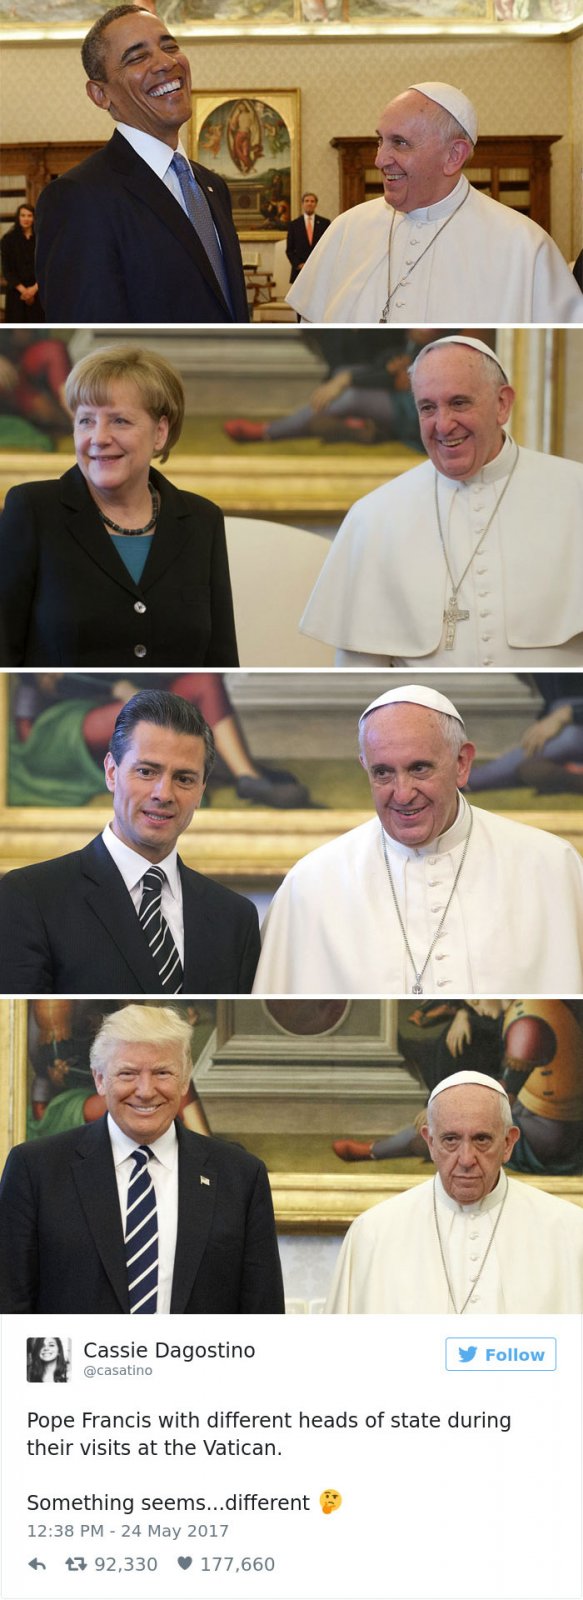 donald-trump-pope-francis-memes-16-59269410a1fbb__700.jpg